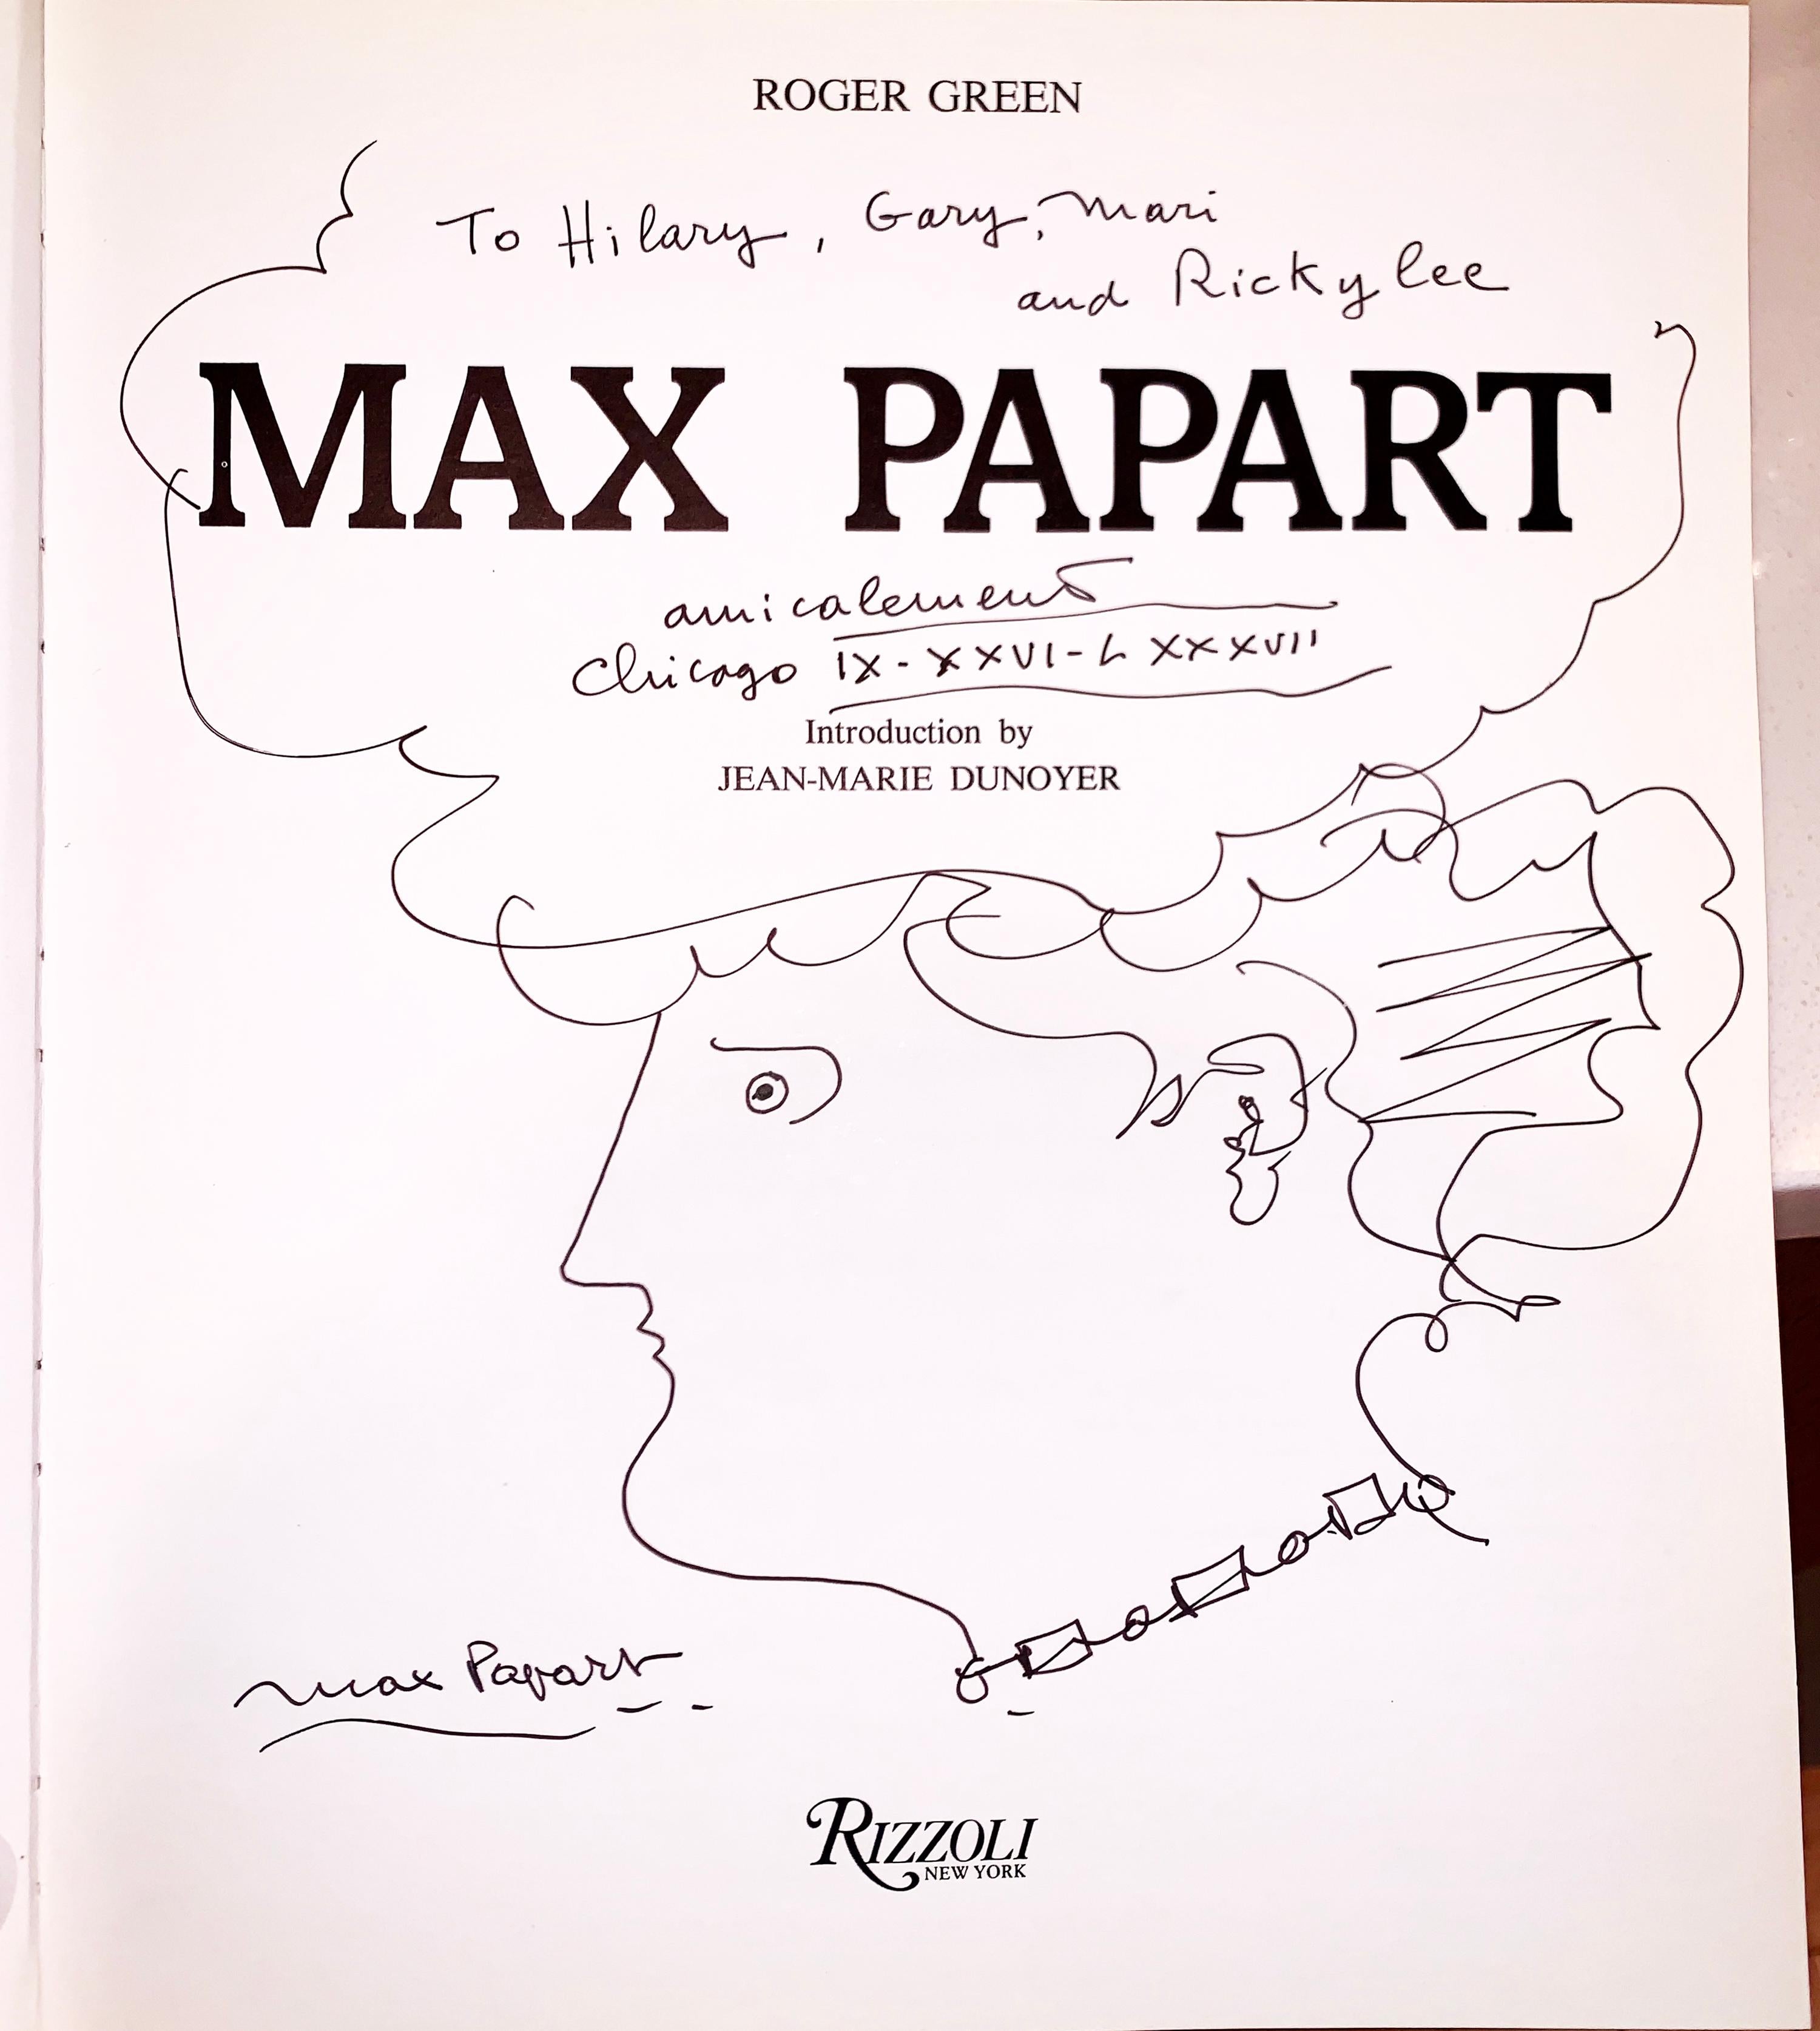 Max Papart, 